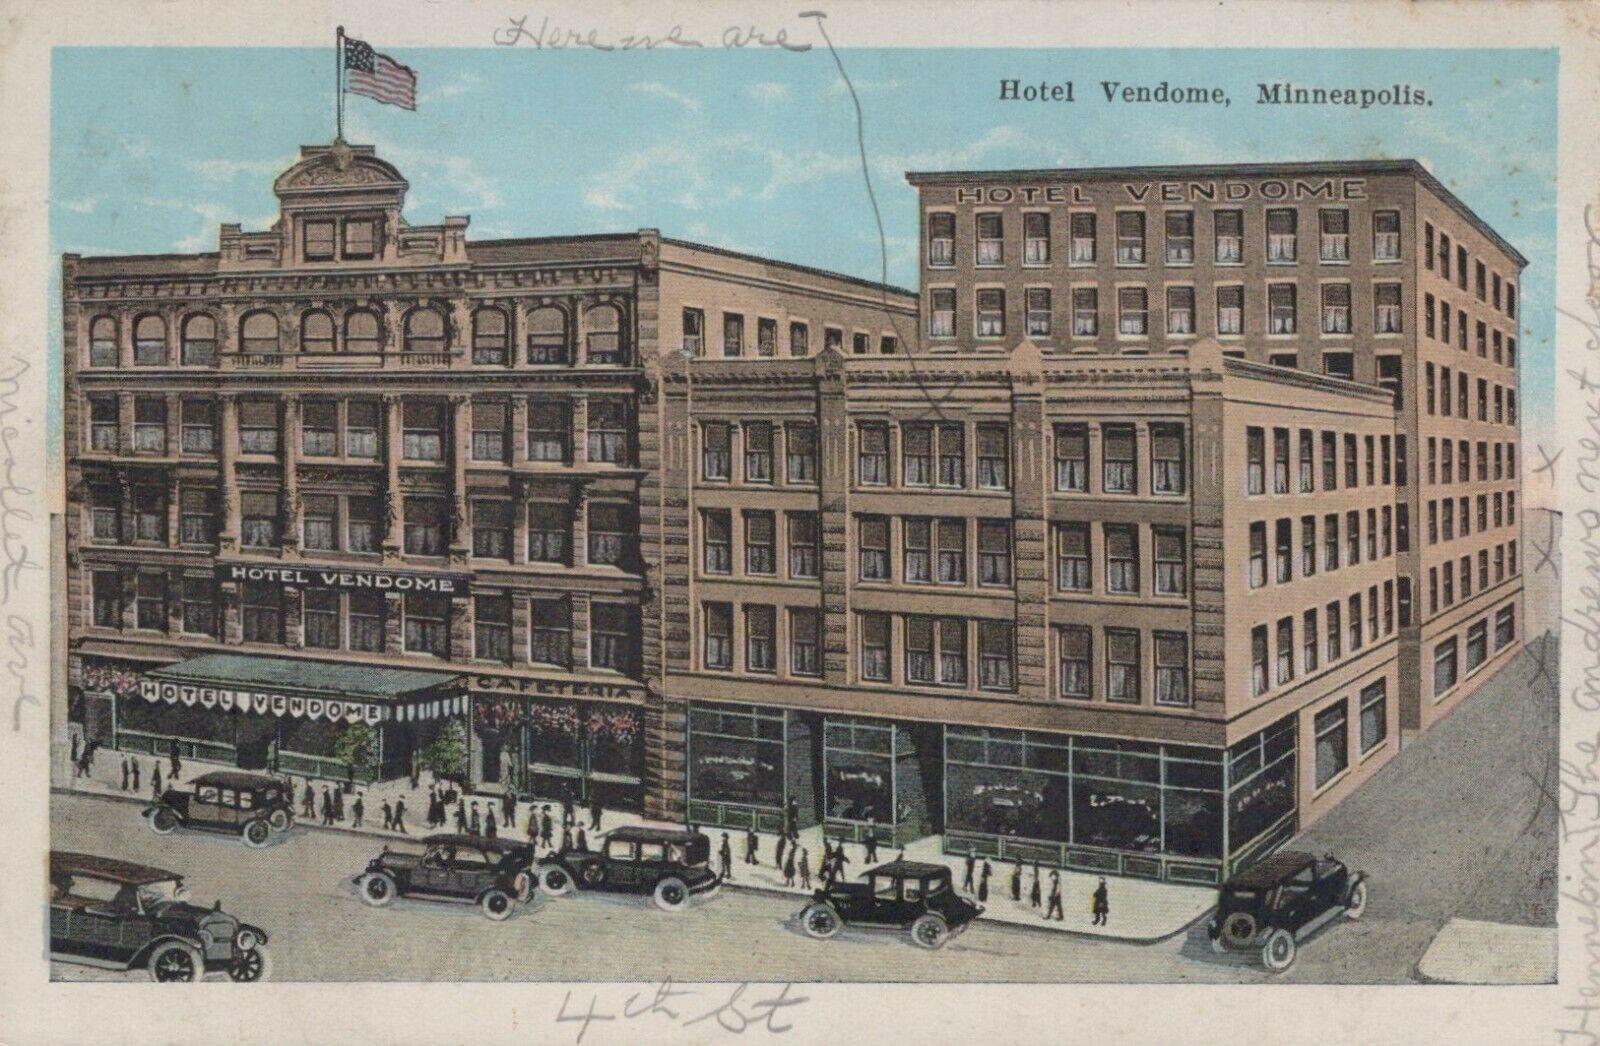 Hotel Vendome Minneapolis Minnesota Written On Vintage White Border Post Card 